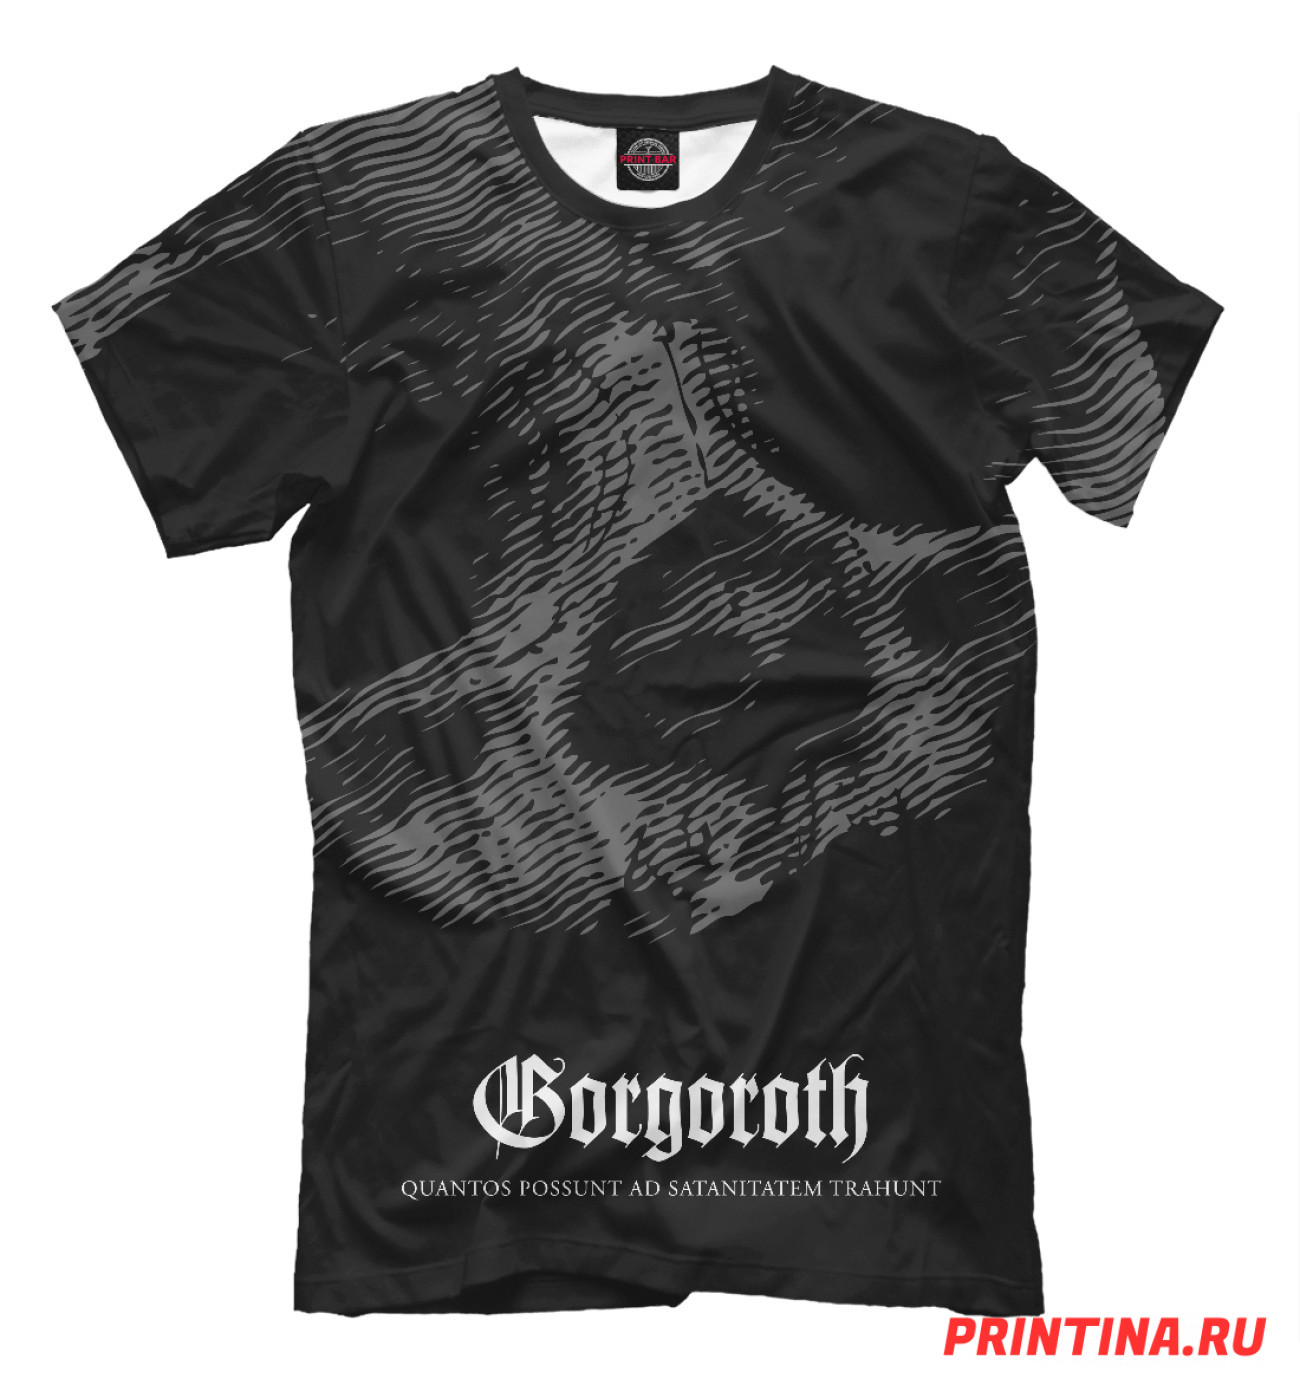 Мужская Футболка Gorgoroth, артикул: MZK-885038-fut-2